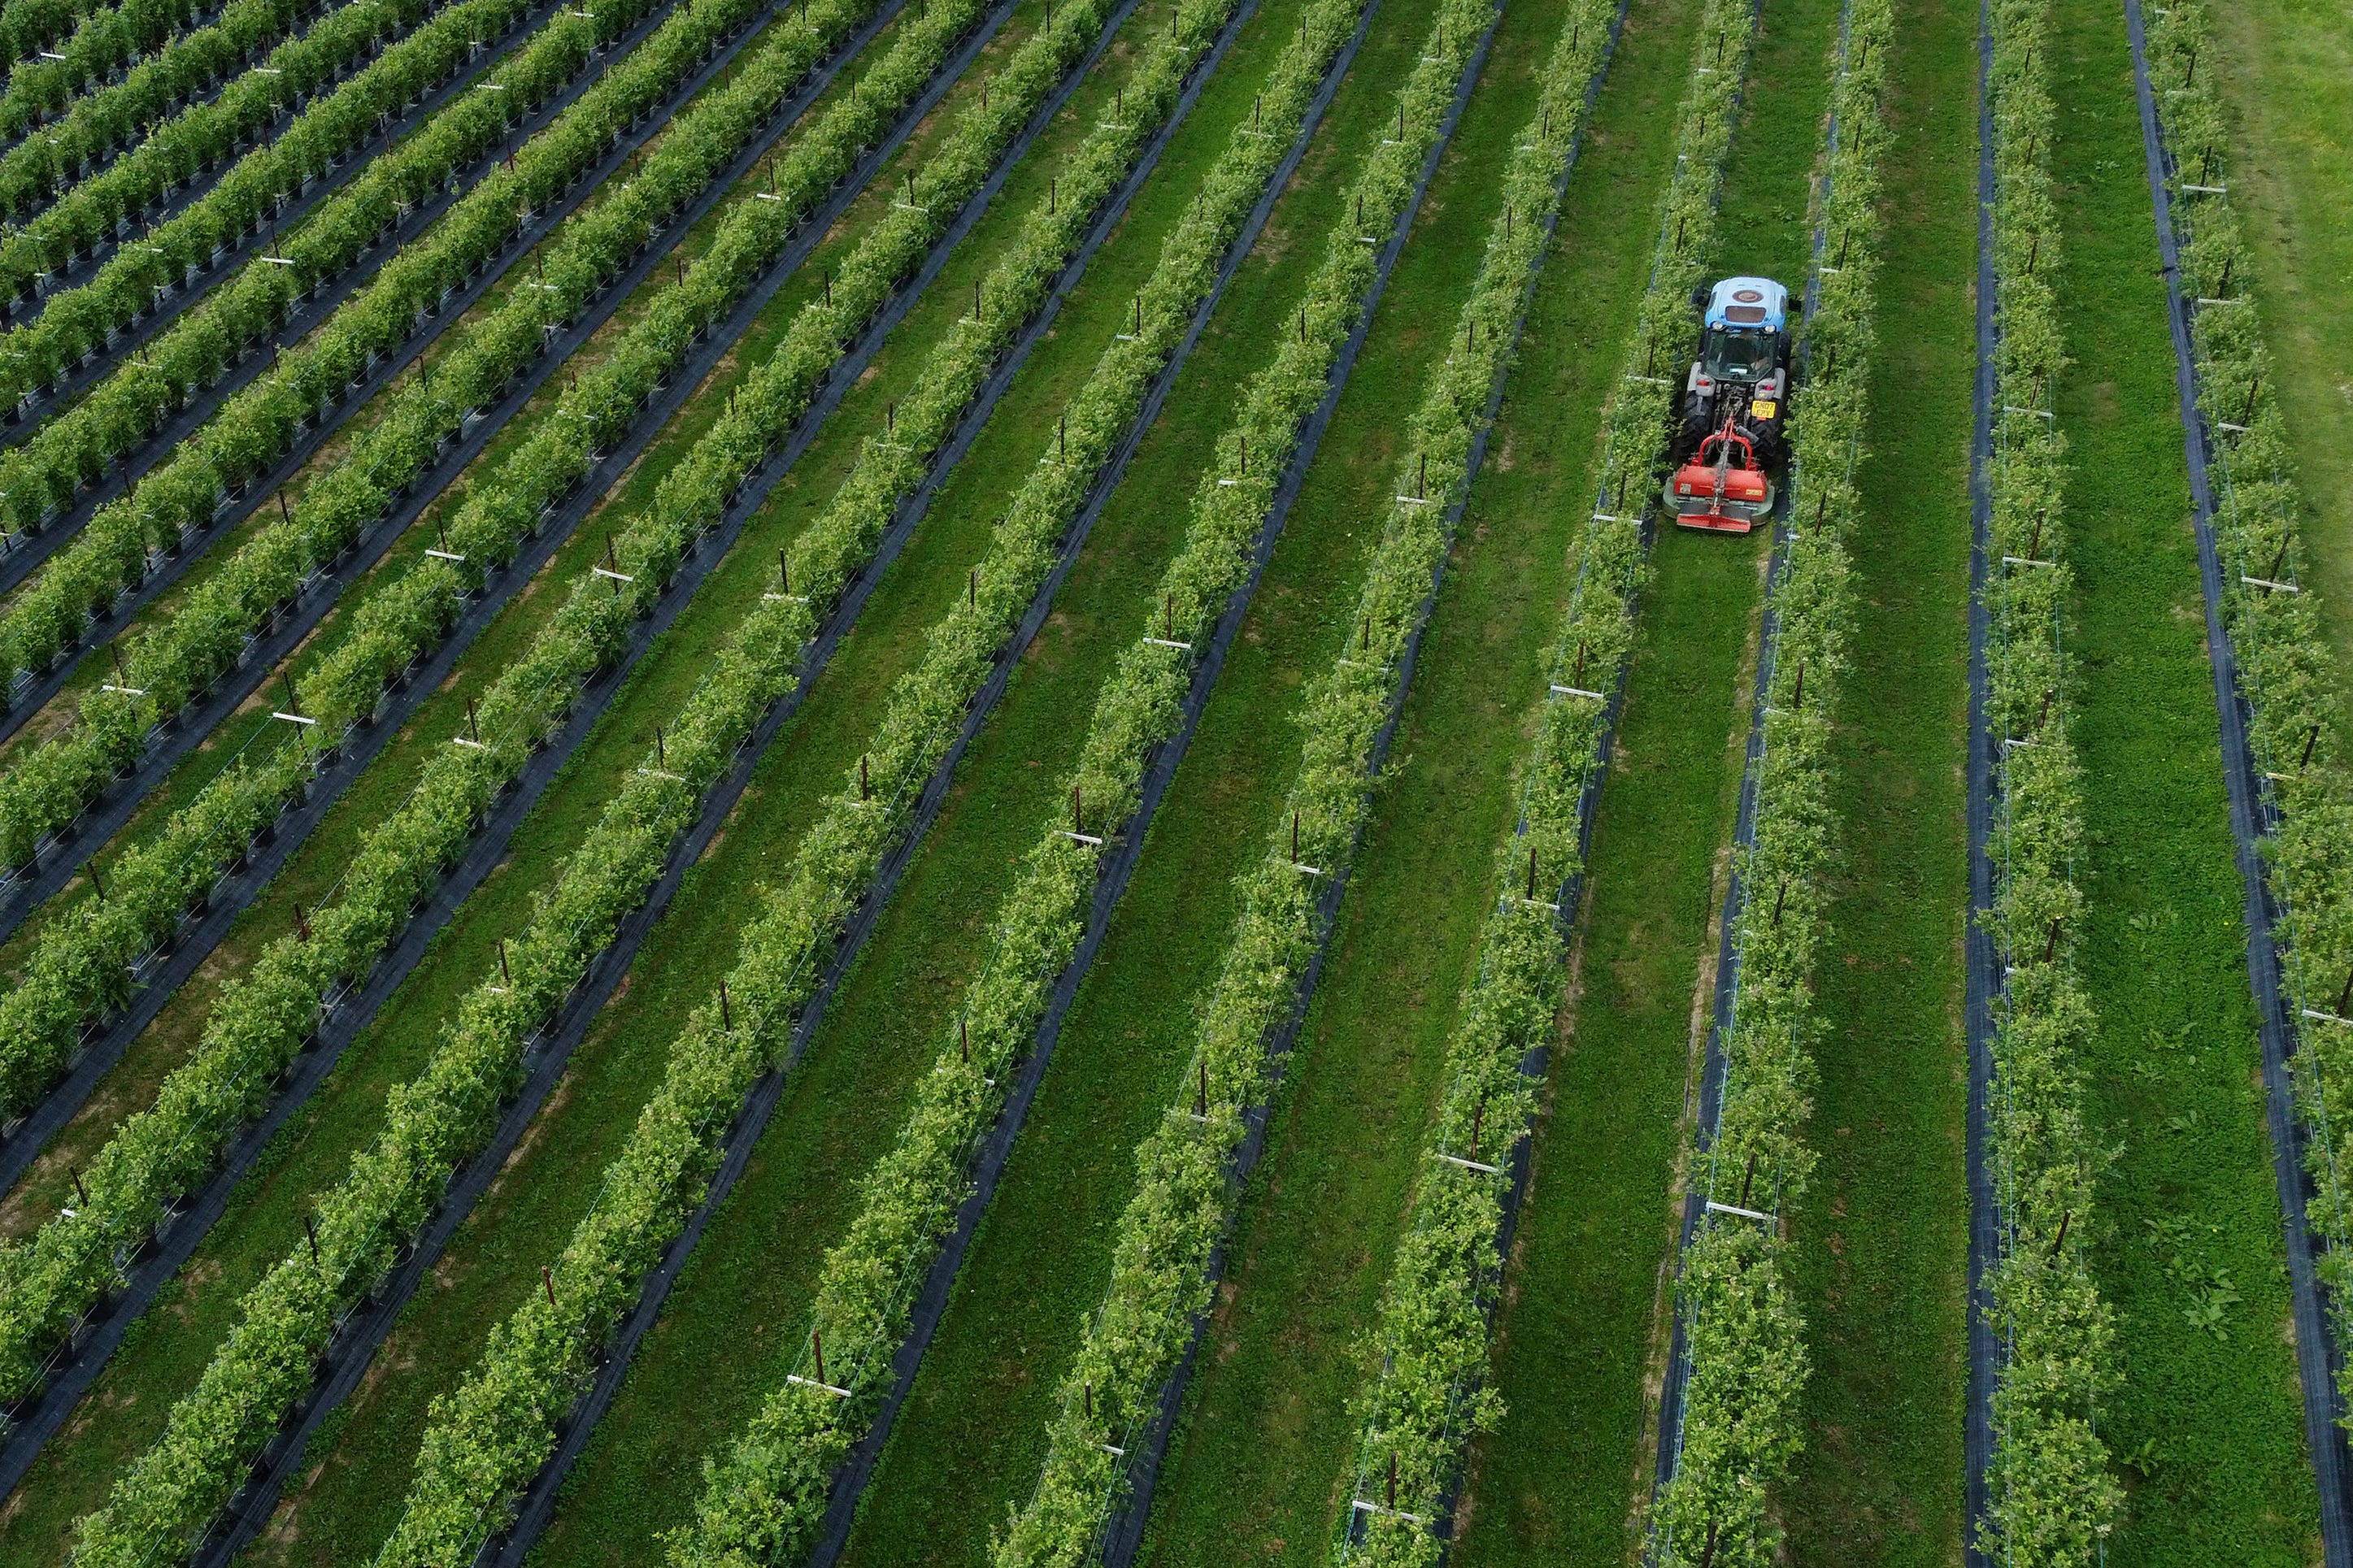 Fertiliser prices have soared over recent years. (Gareth Fuller/PA)